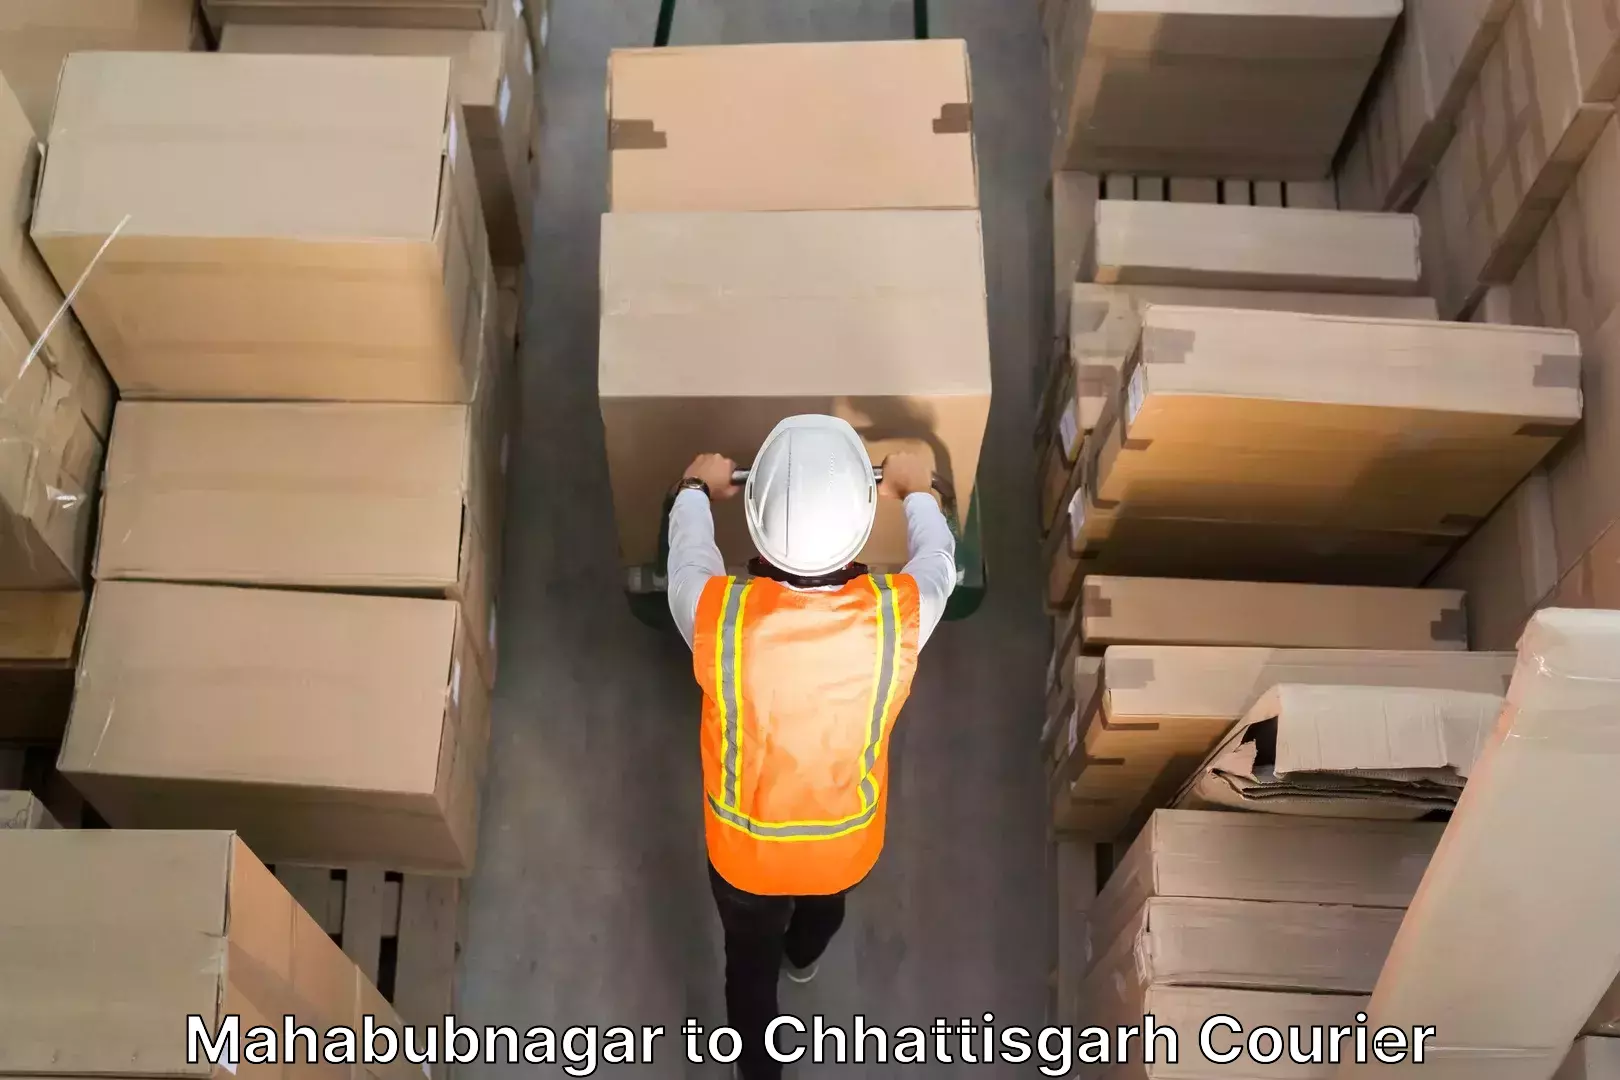 Moving and storage services in Mahabubnagar to Chhattisgarh